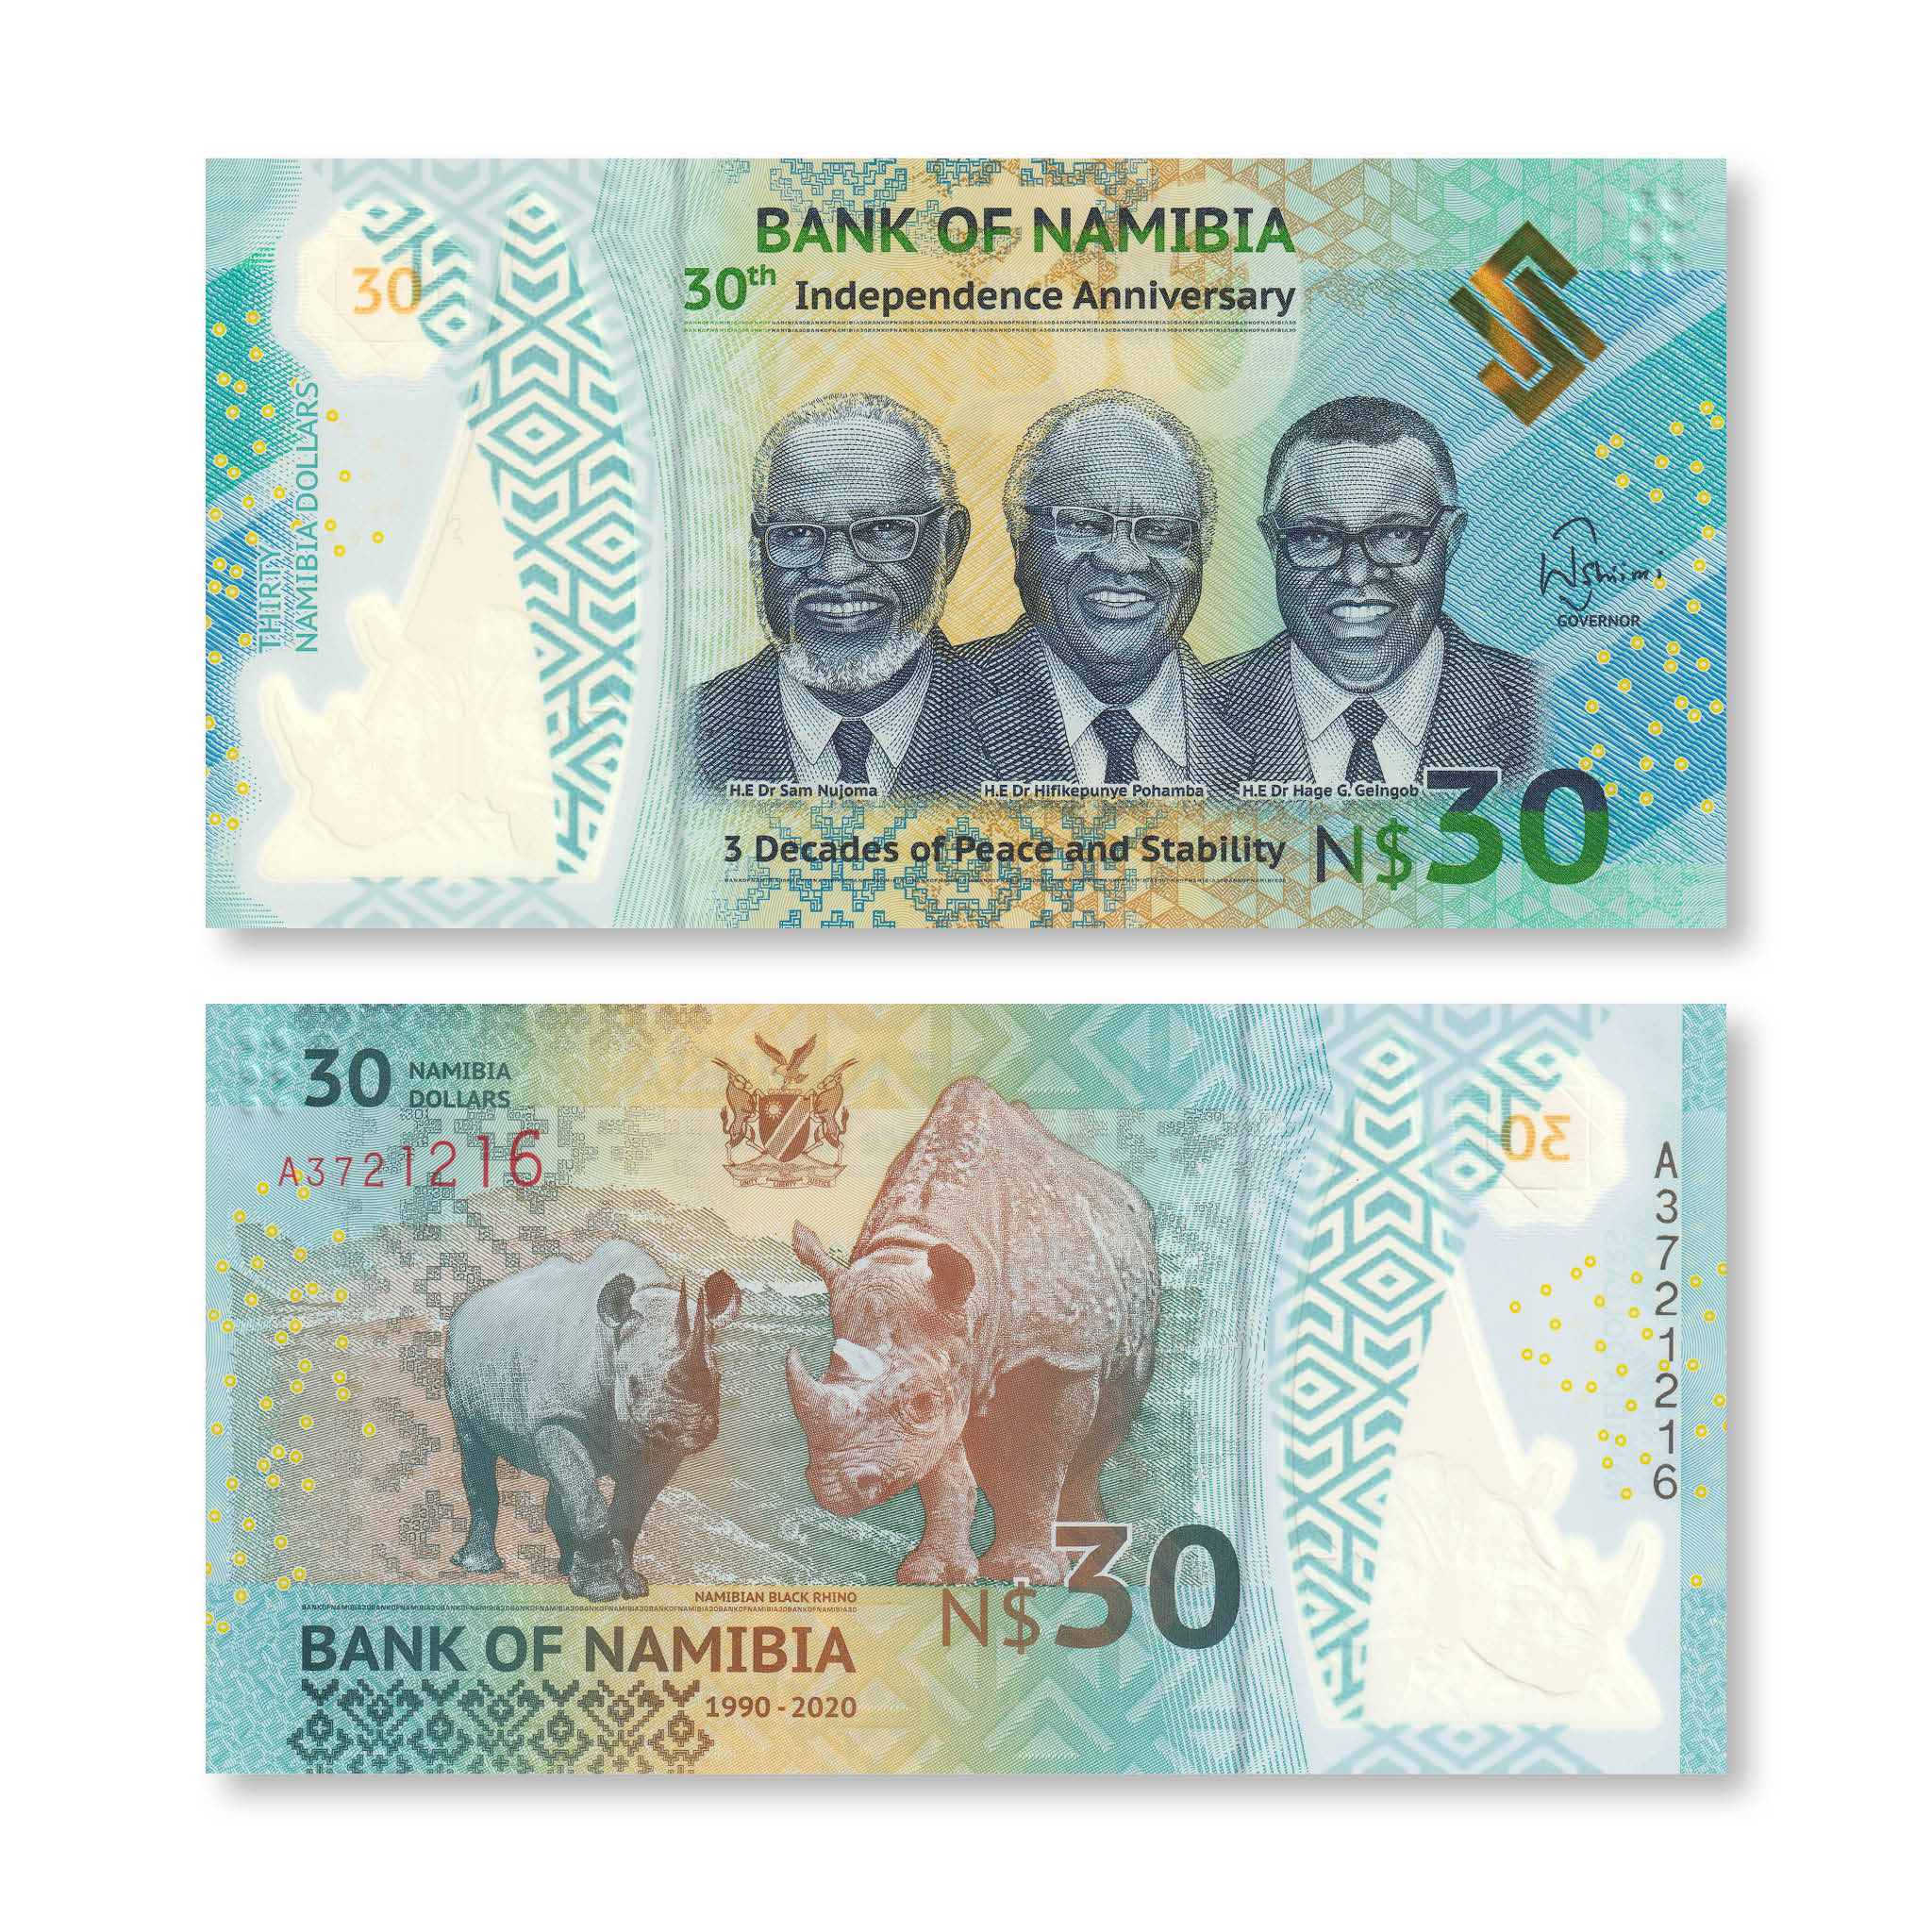 Namibia 30 Dollars, 2020 Commemorative, B218a, UNC - Robert's World Money - World Banknotes